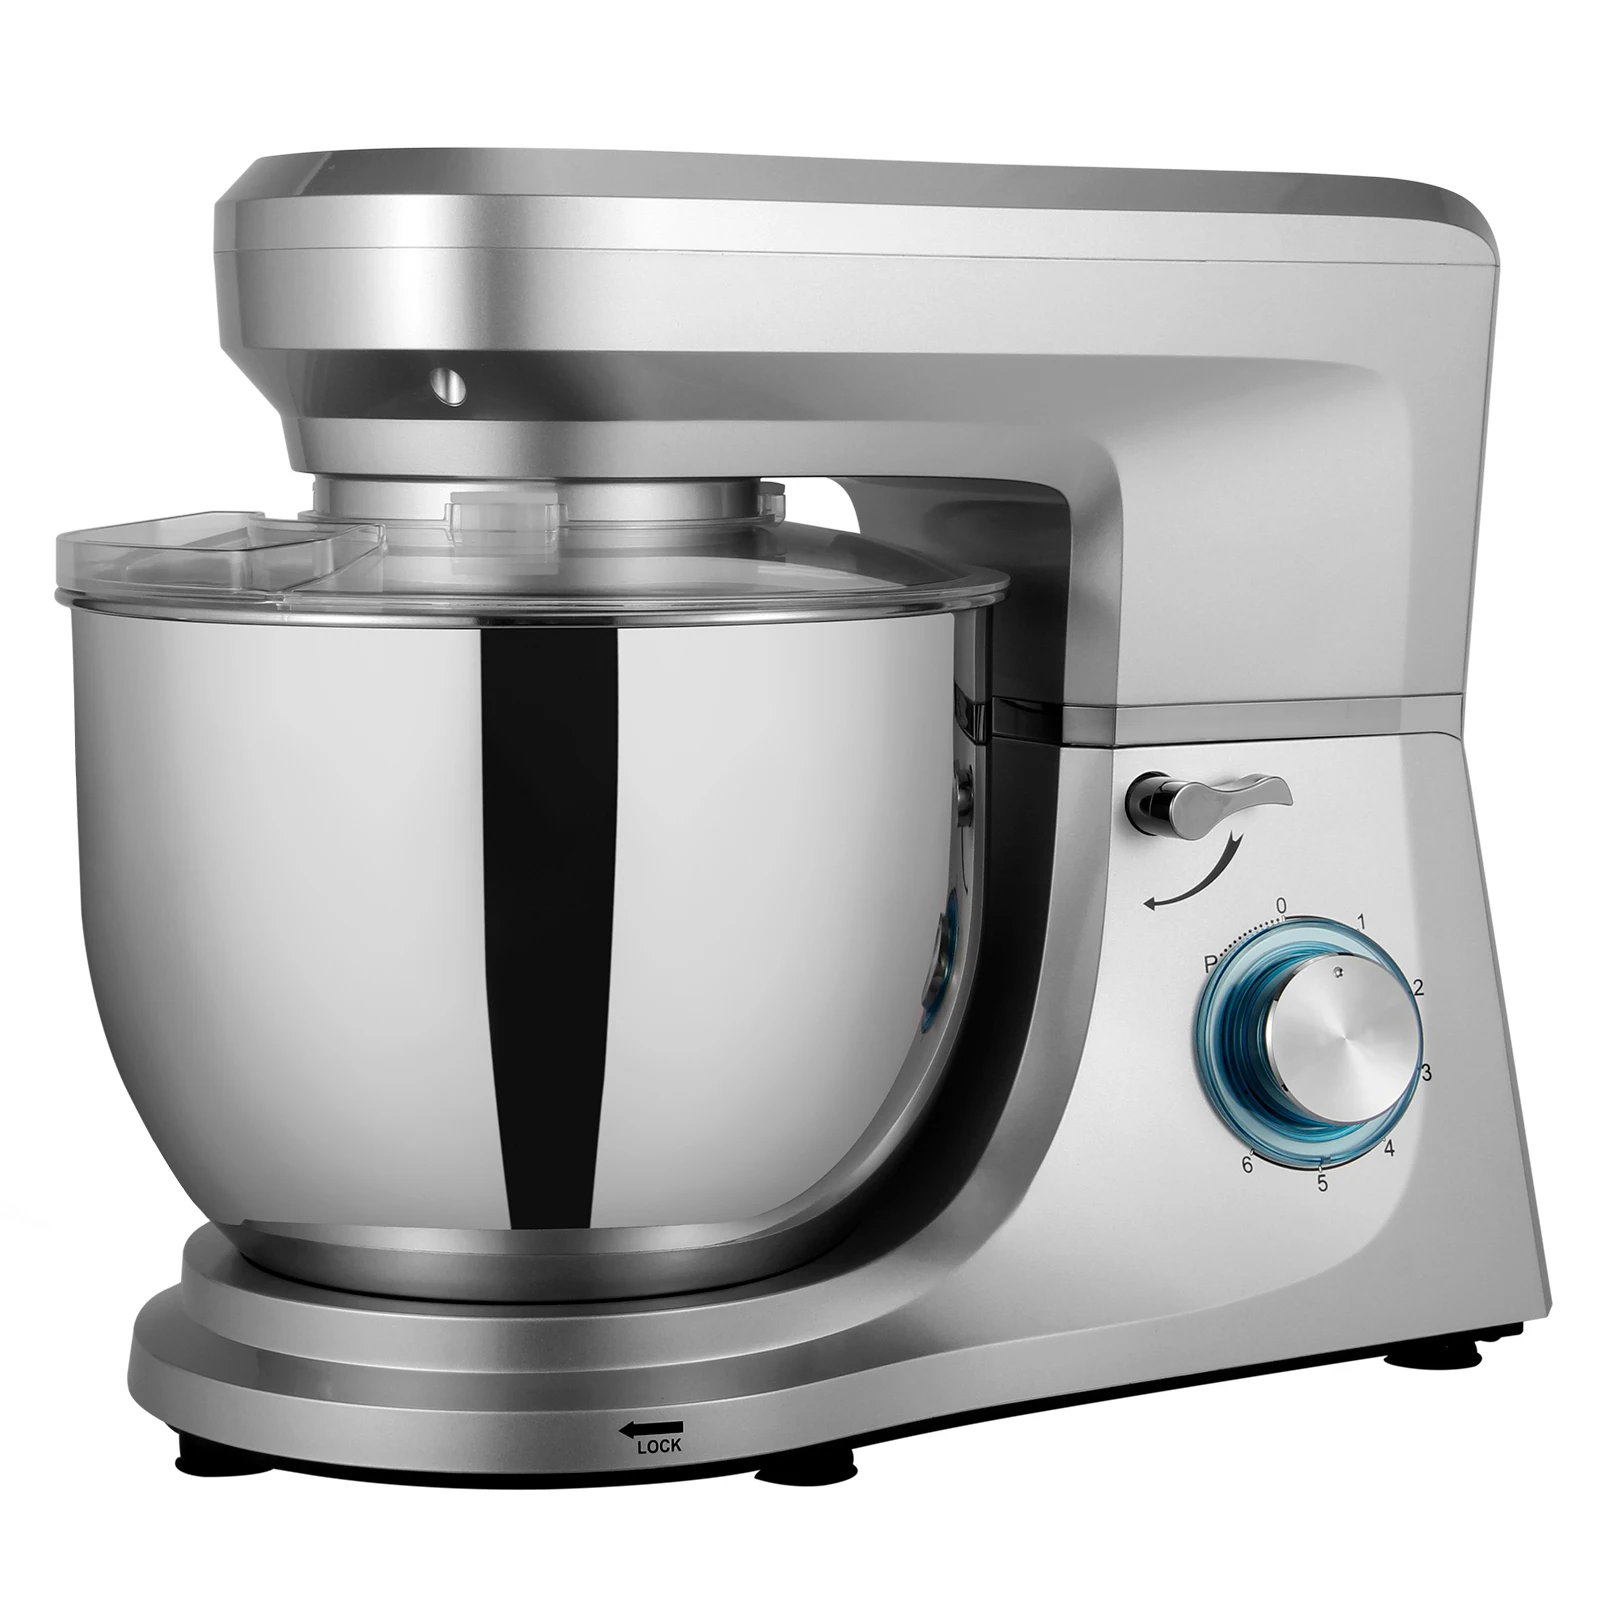 SUPRASCO 1500W 7L Bowl powerful kitchen dough stand mixer enlarge